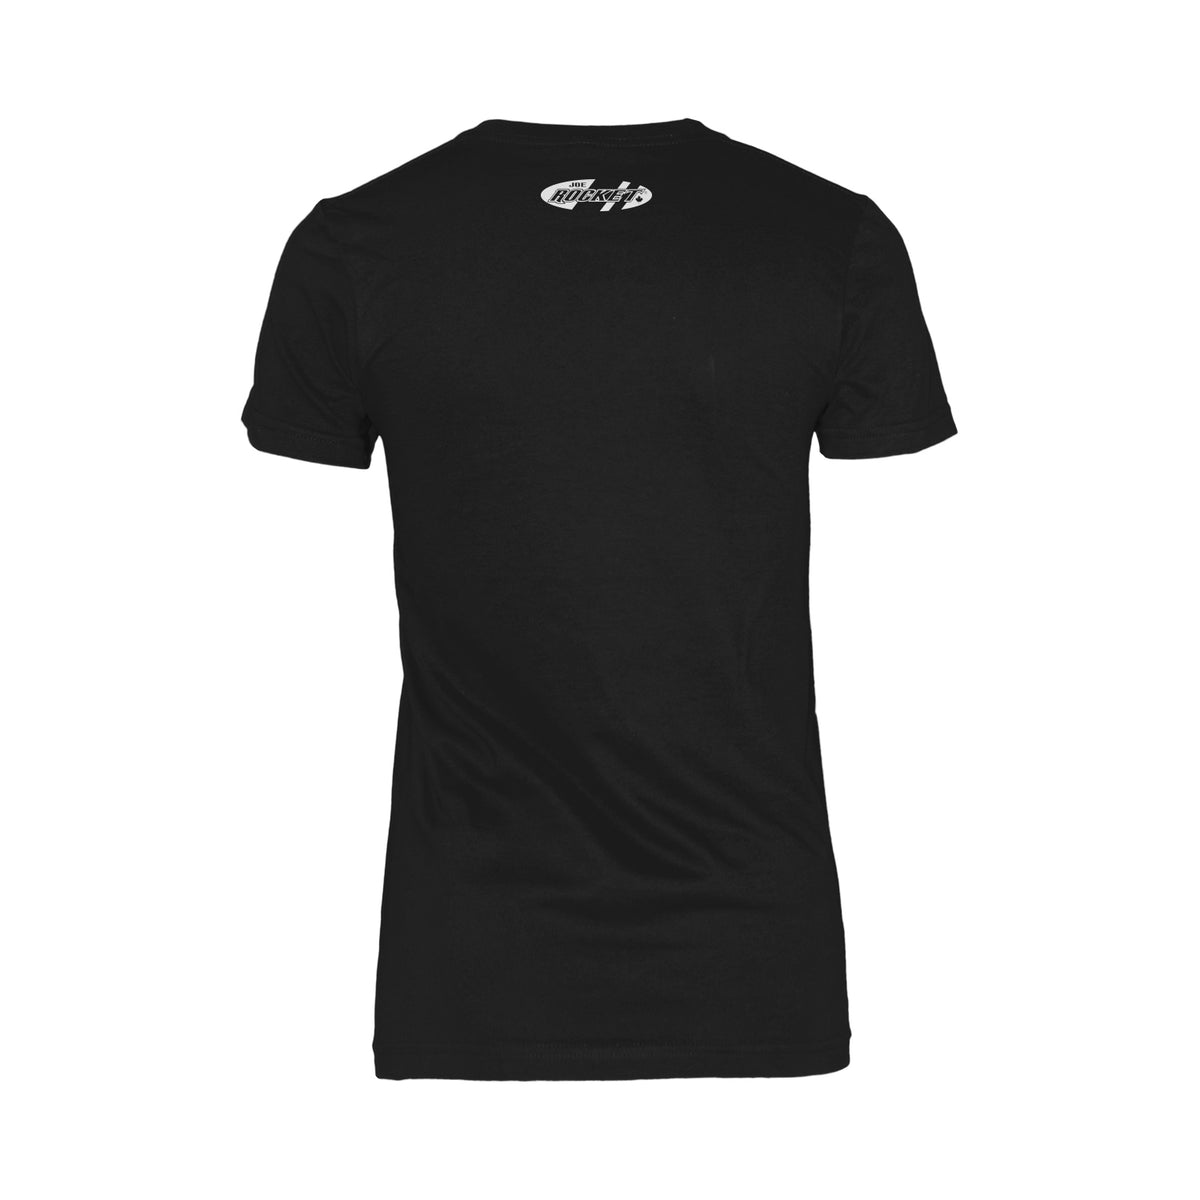 Corp™ T-Shirt